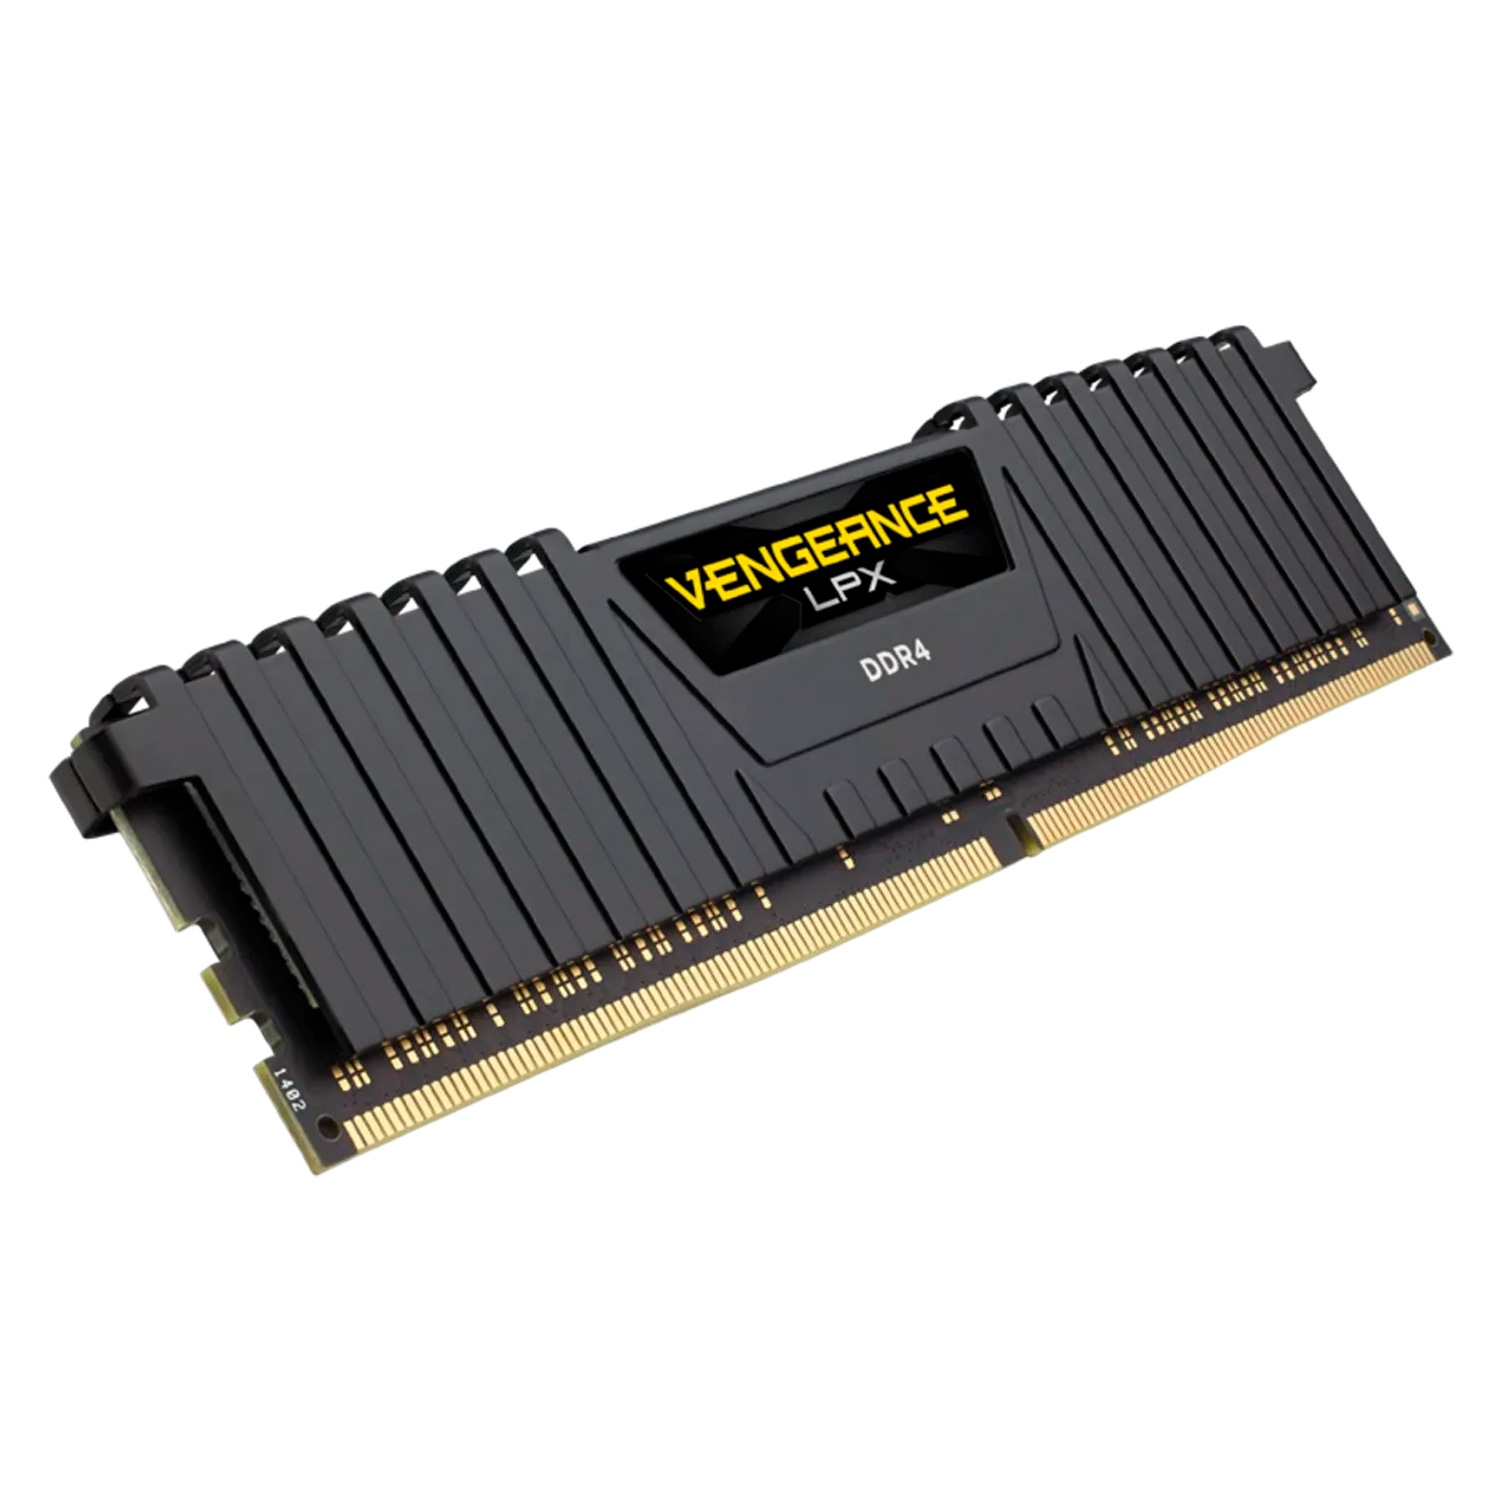 Memória RAM Corsair Vengeance LPX 16GB (2x8GB) DDR4 2400MHz - CMK16GX4M2A2400C16